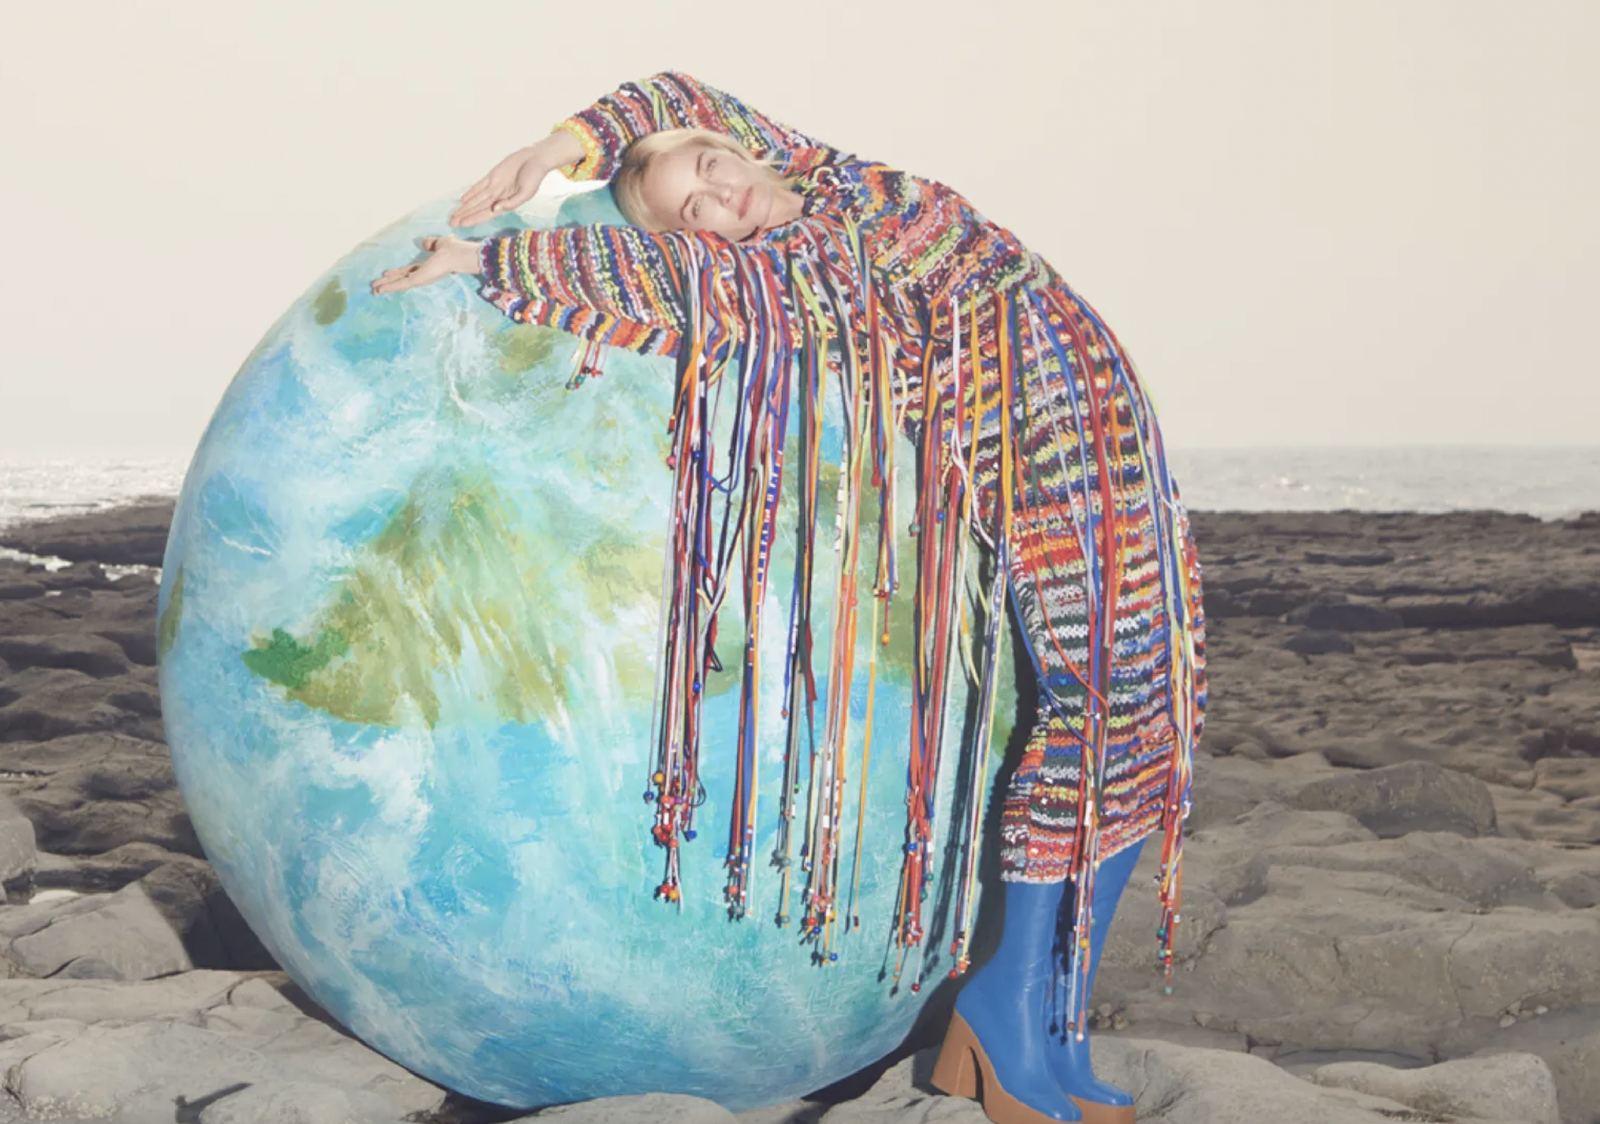 A model leaning on a globe in a Stella McCartney ad